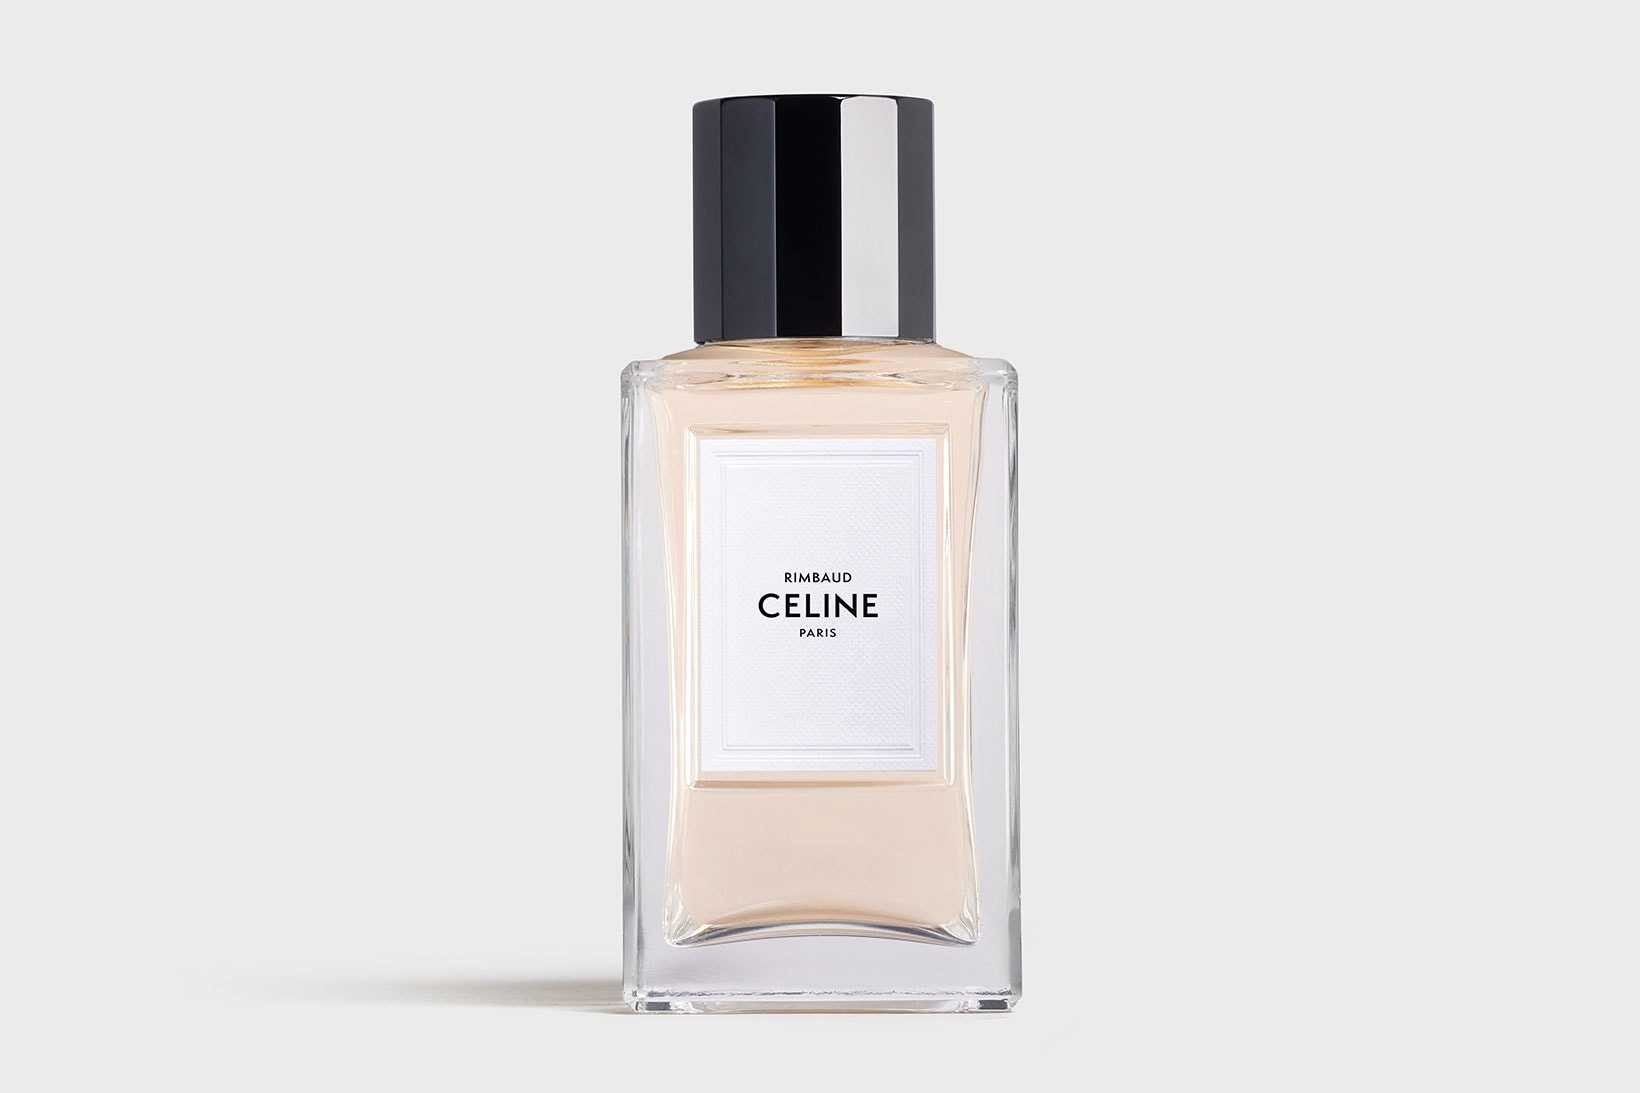 CELINE Parfumerie RIMBAUD Perfume Scent Lavender Iris Hedi Slimane Release Info